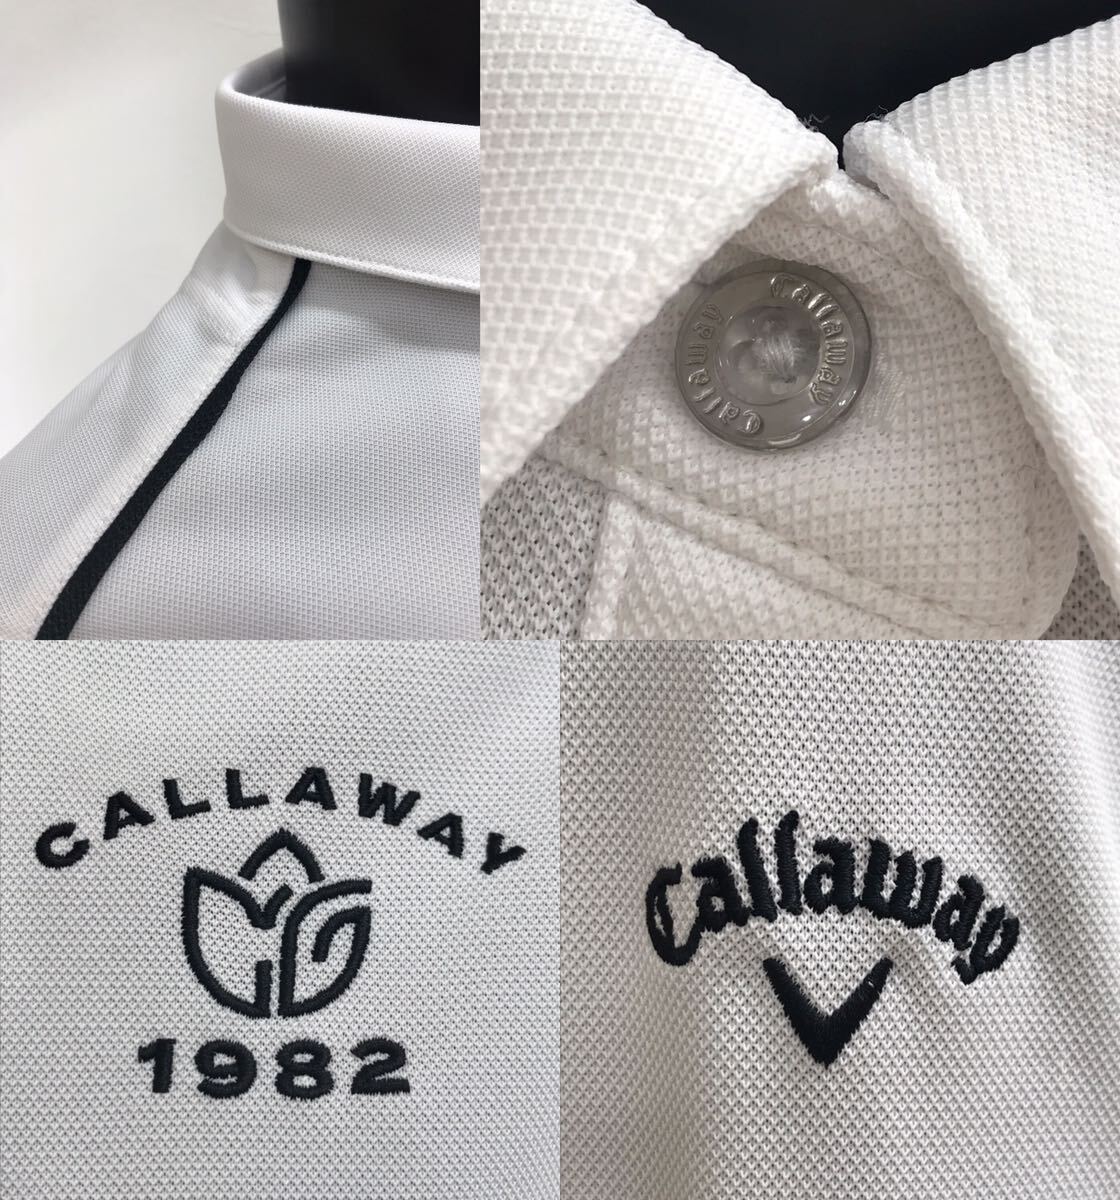 【USED】Callaway キャロウェイ ポリエステル 長袖 ポロシャツ ロゴ刺繍 ホワイト 白 レディース L ゴルフウェアの画像7